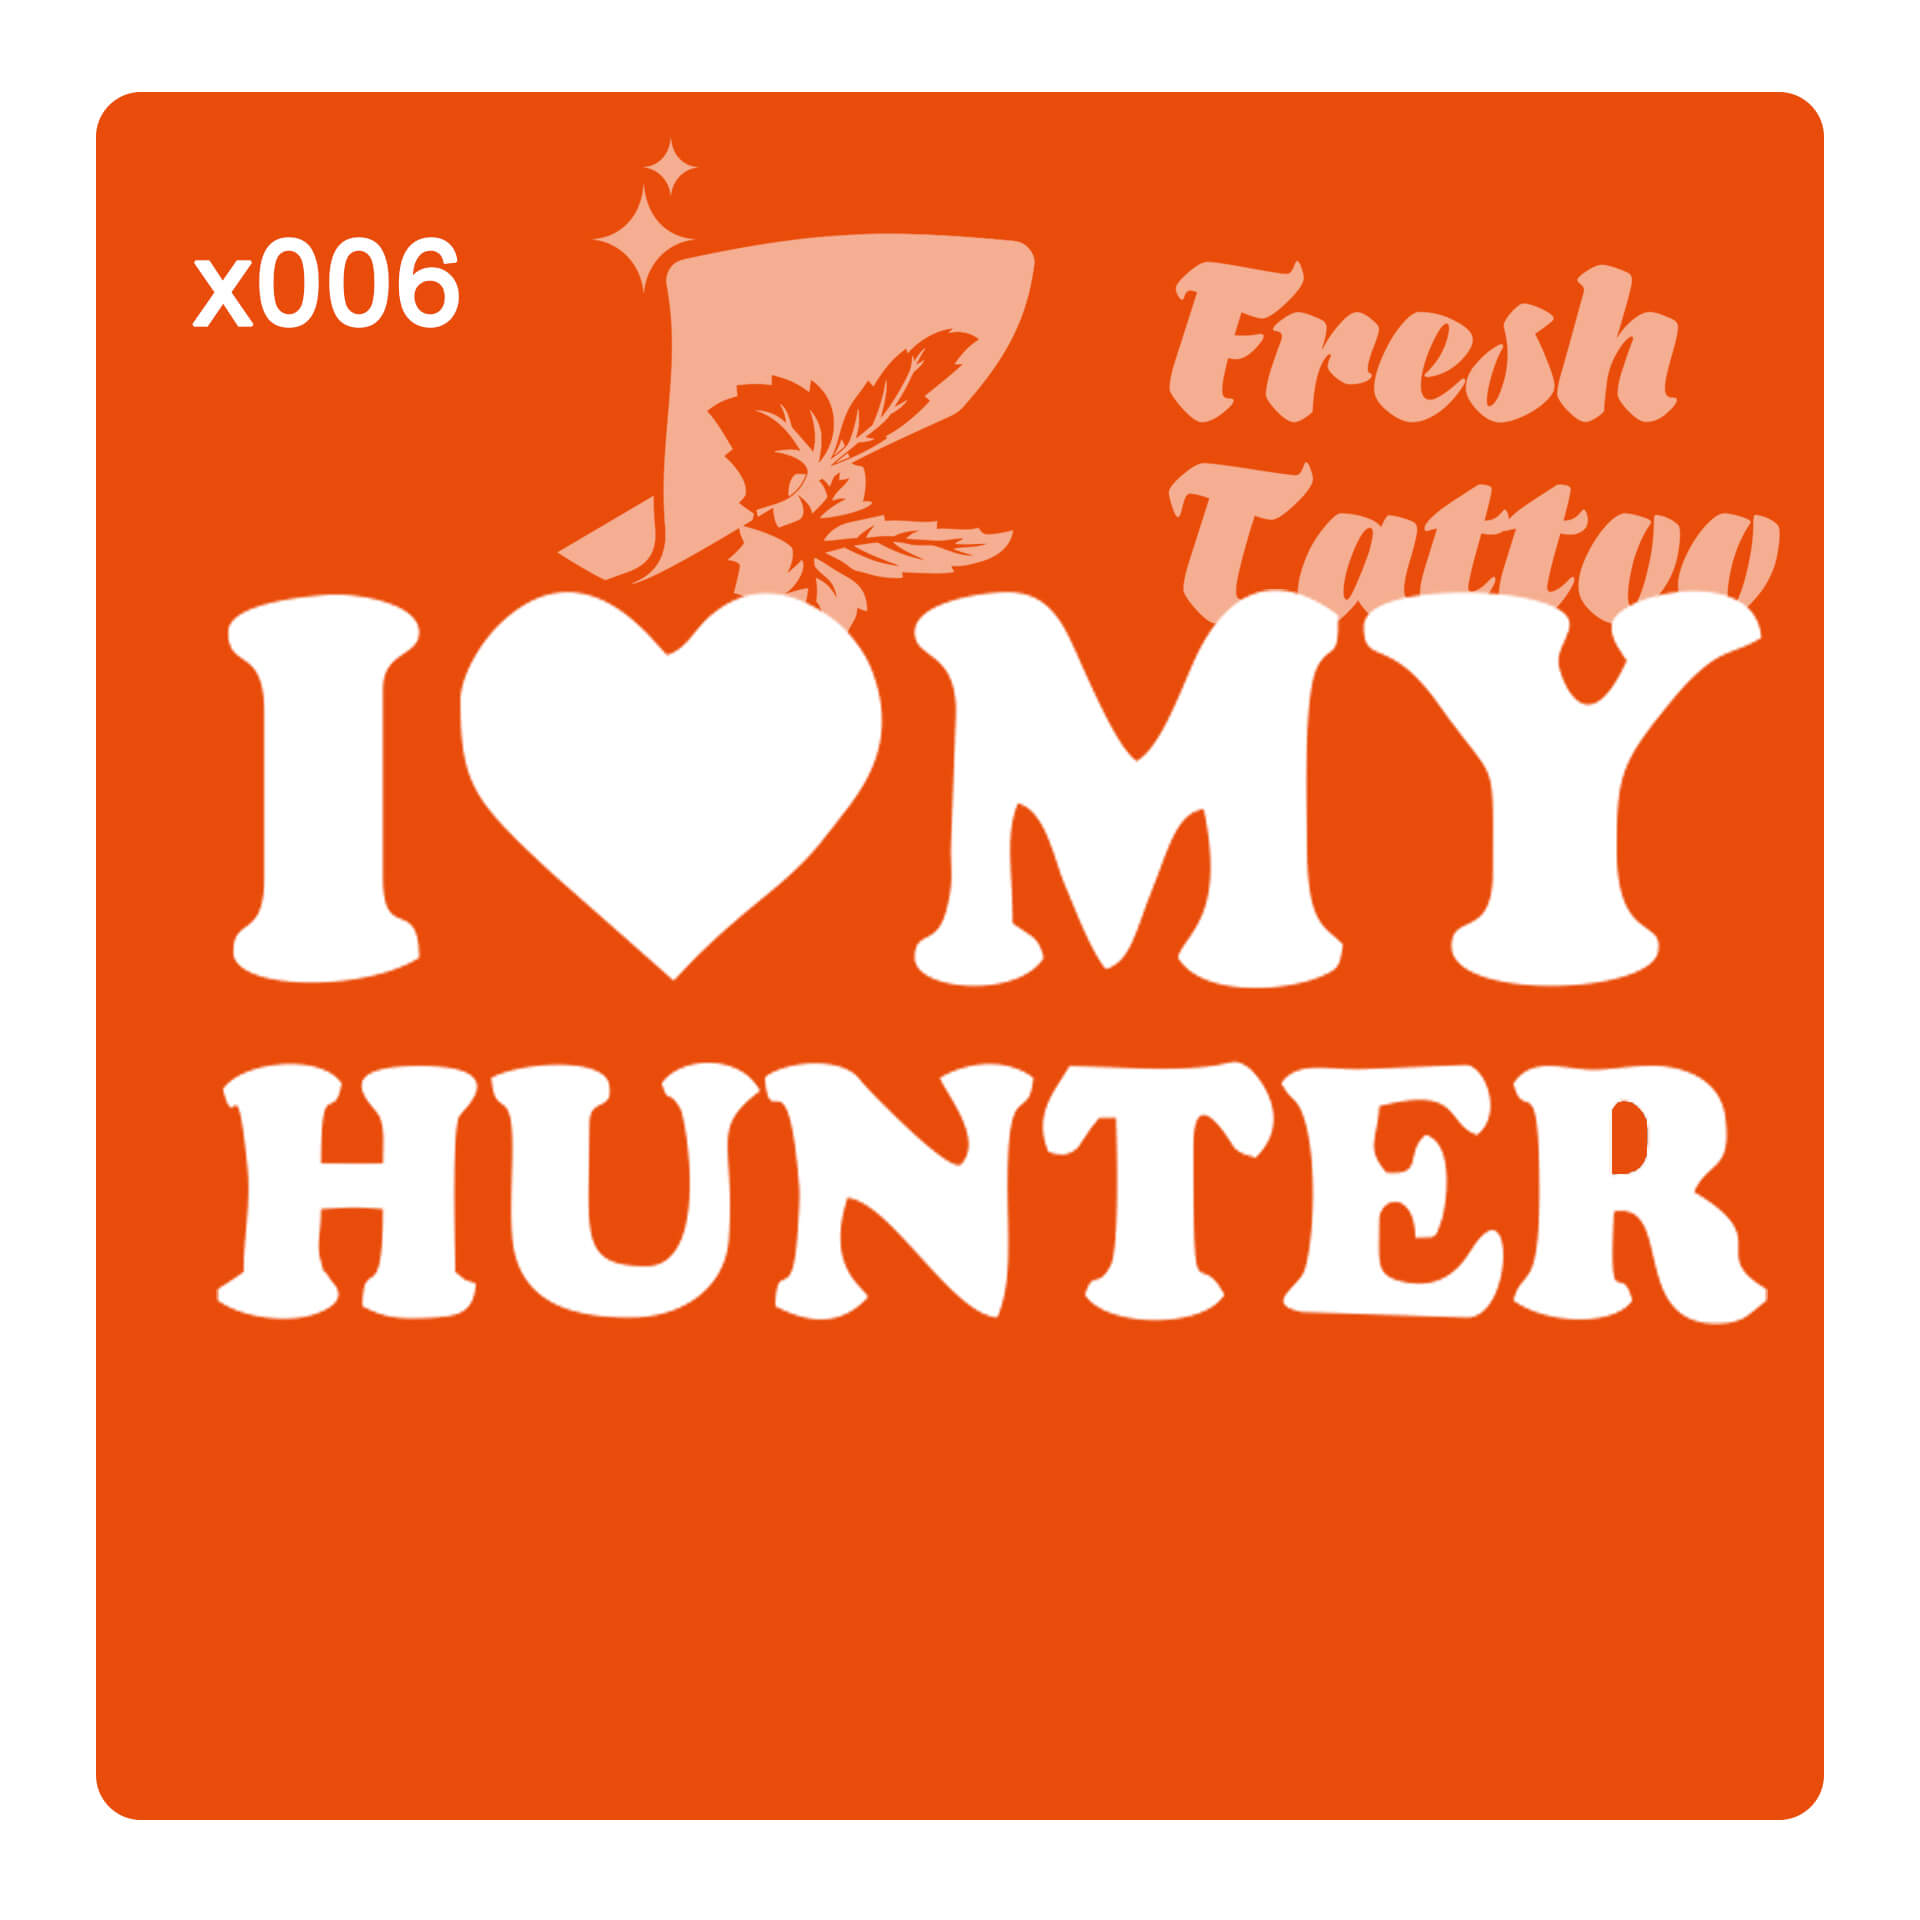 I love my hunter x006  